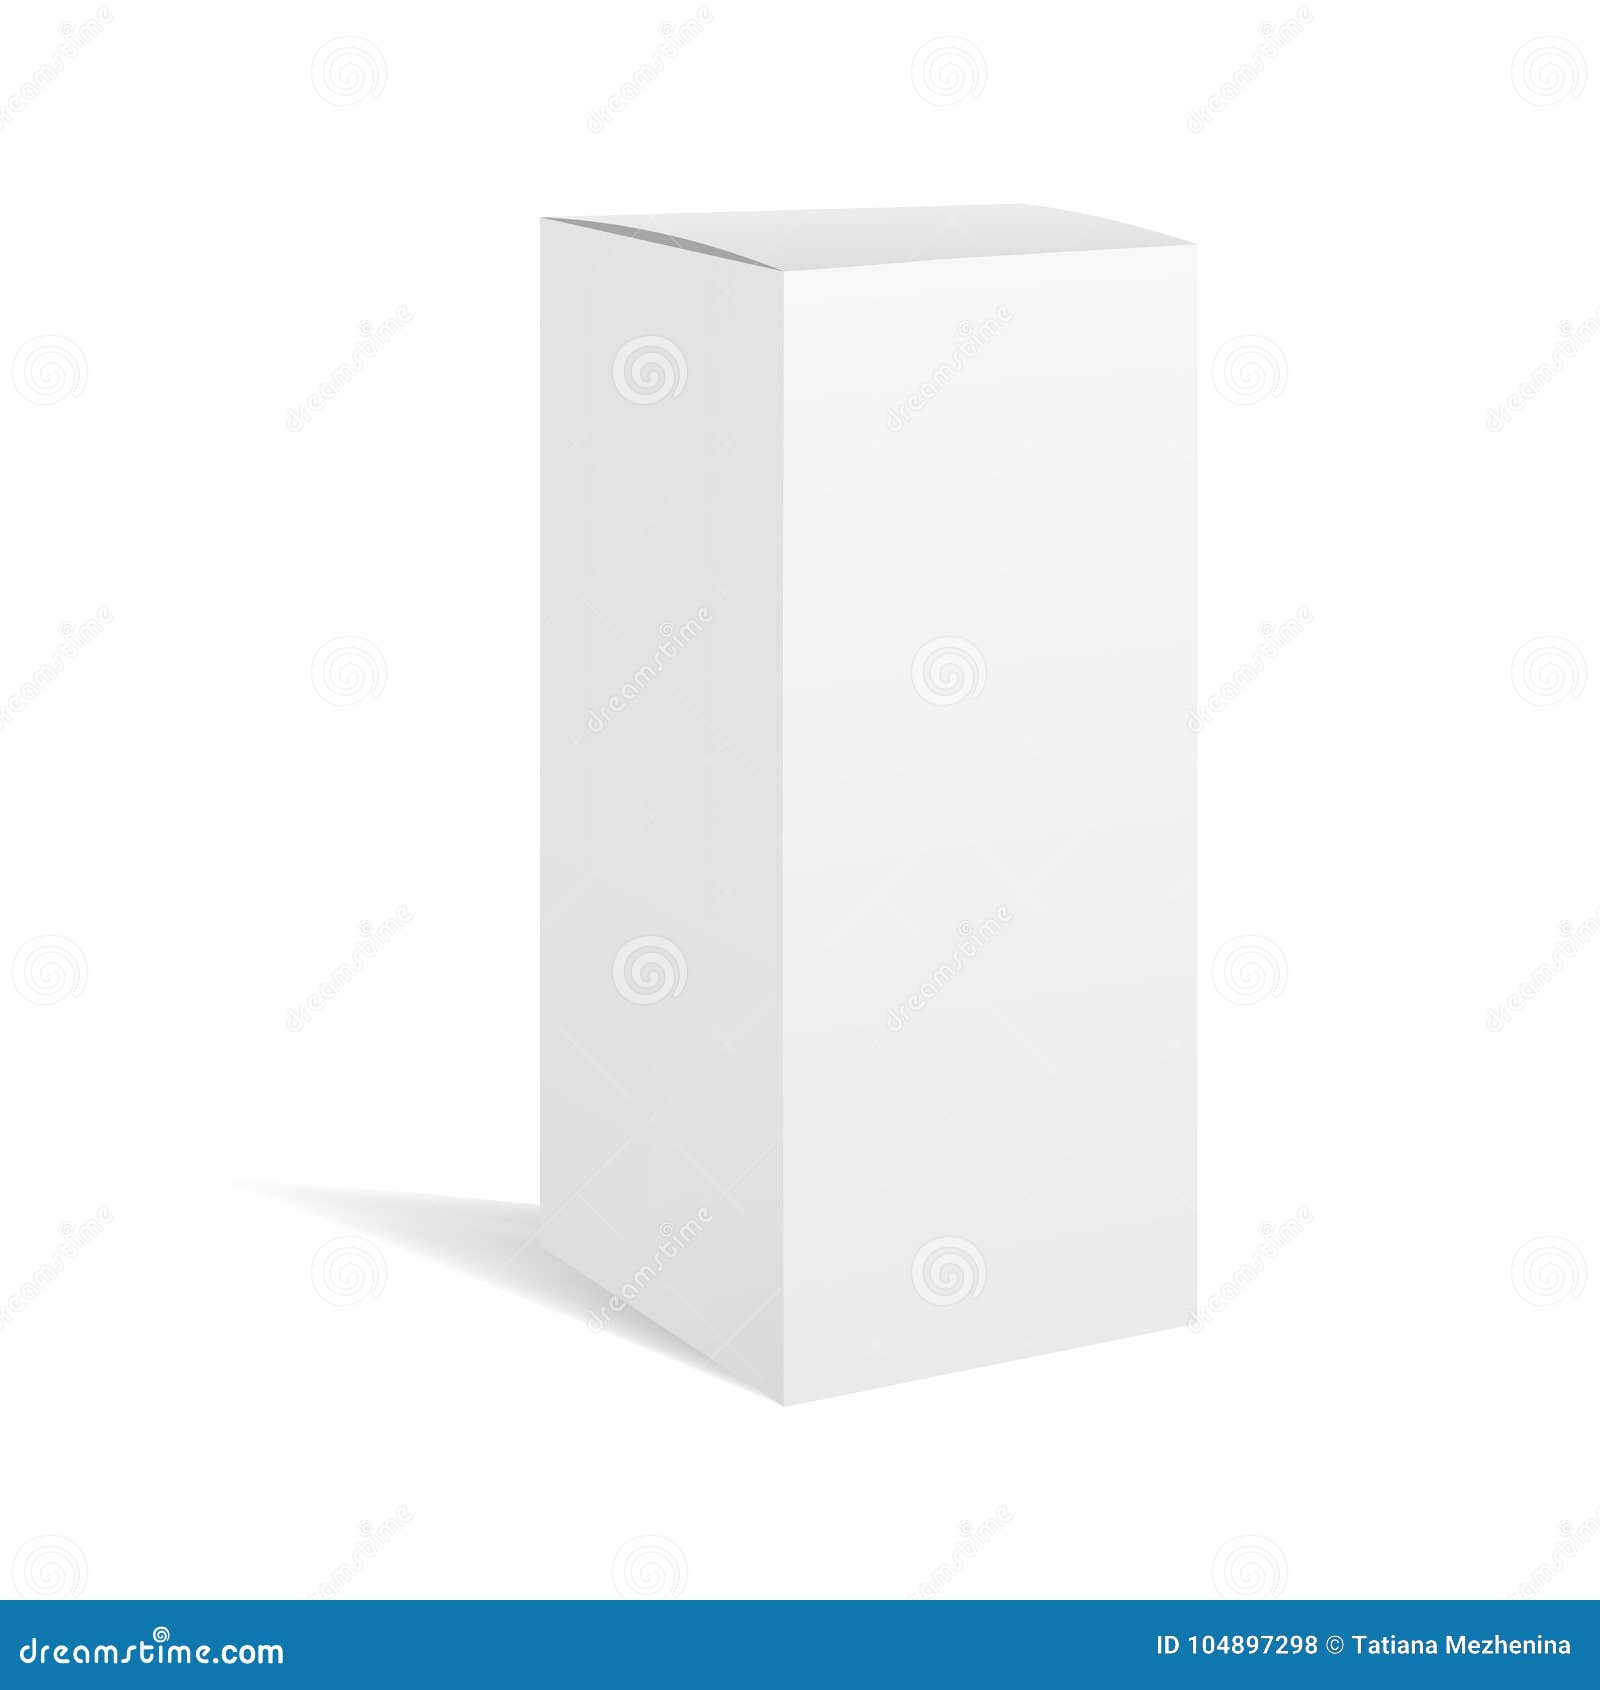 Download White Rectangular Box Package Mockup Stock Illustration Illustration Of Perspective Pack 104897298